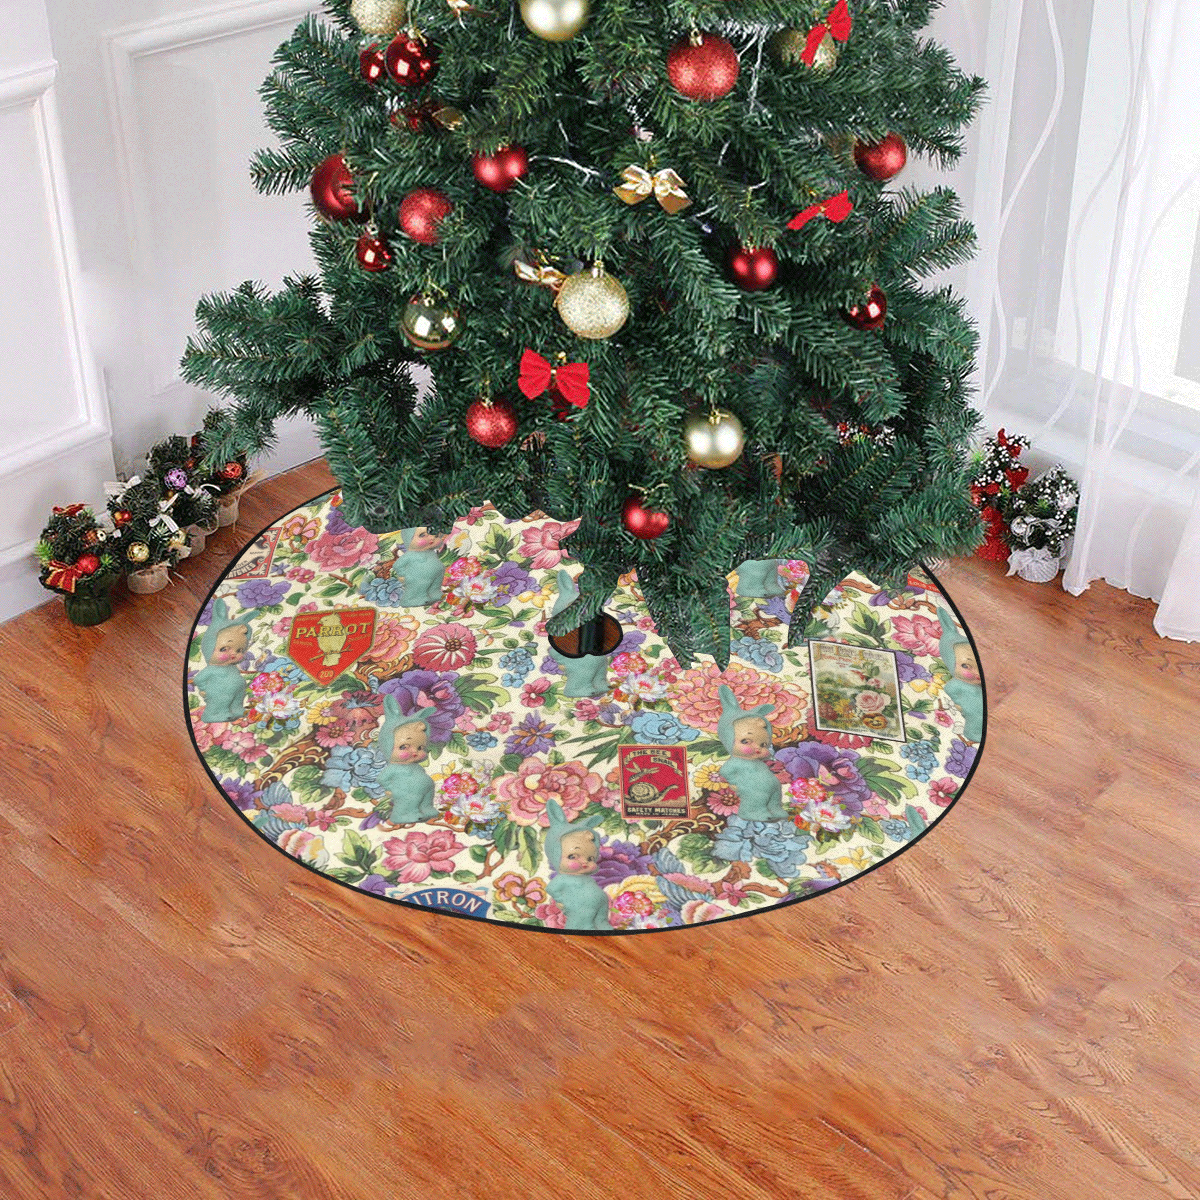 Lapinou de mon Coeur Christmas Tree Skirt 47" x 47"